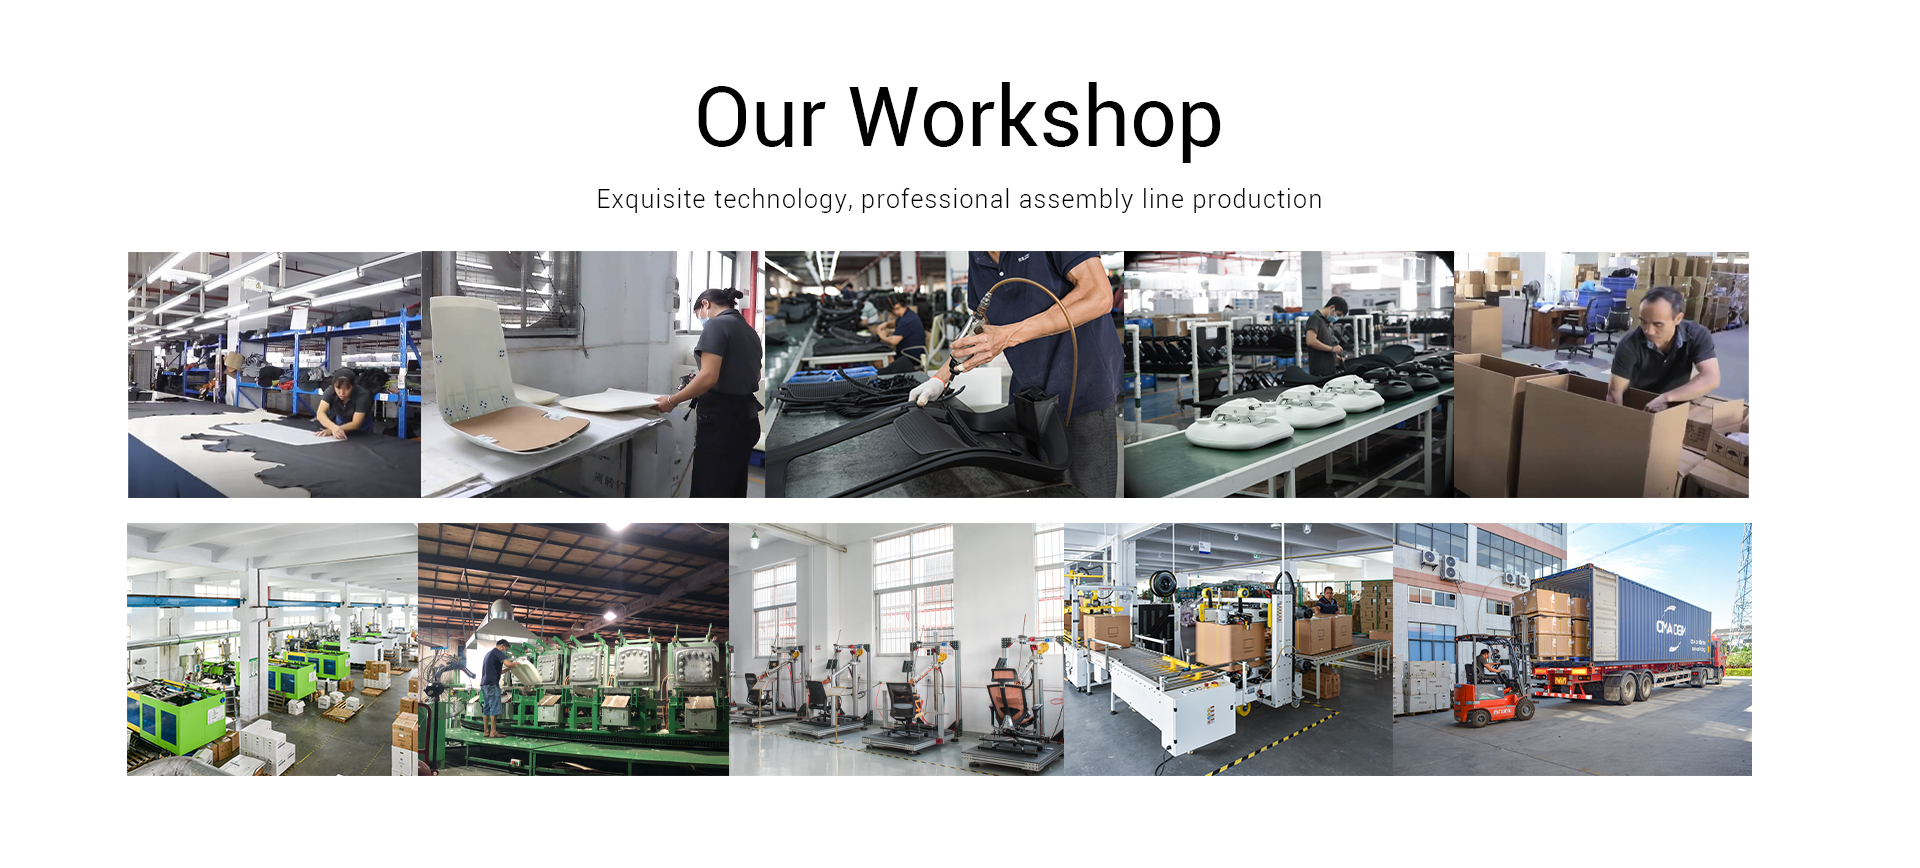 Our Workshop